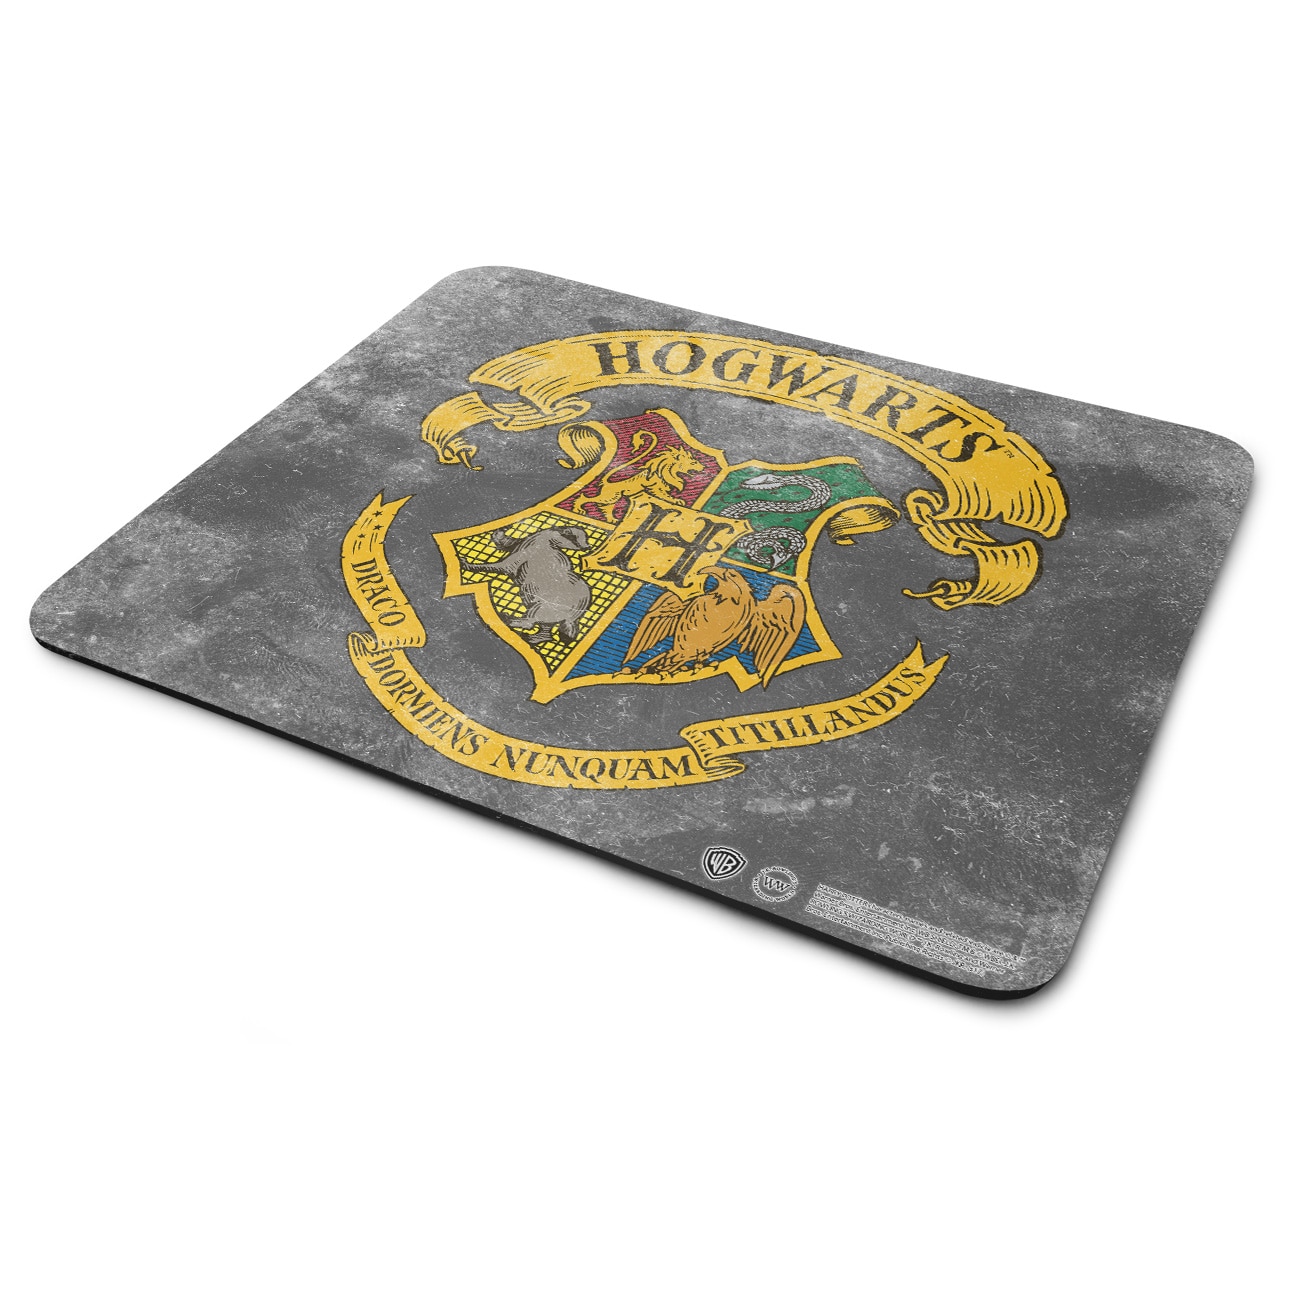 Hogwarts Crest Mouse Pad 3-Pack